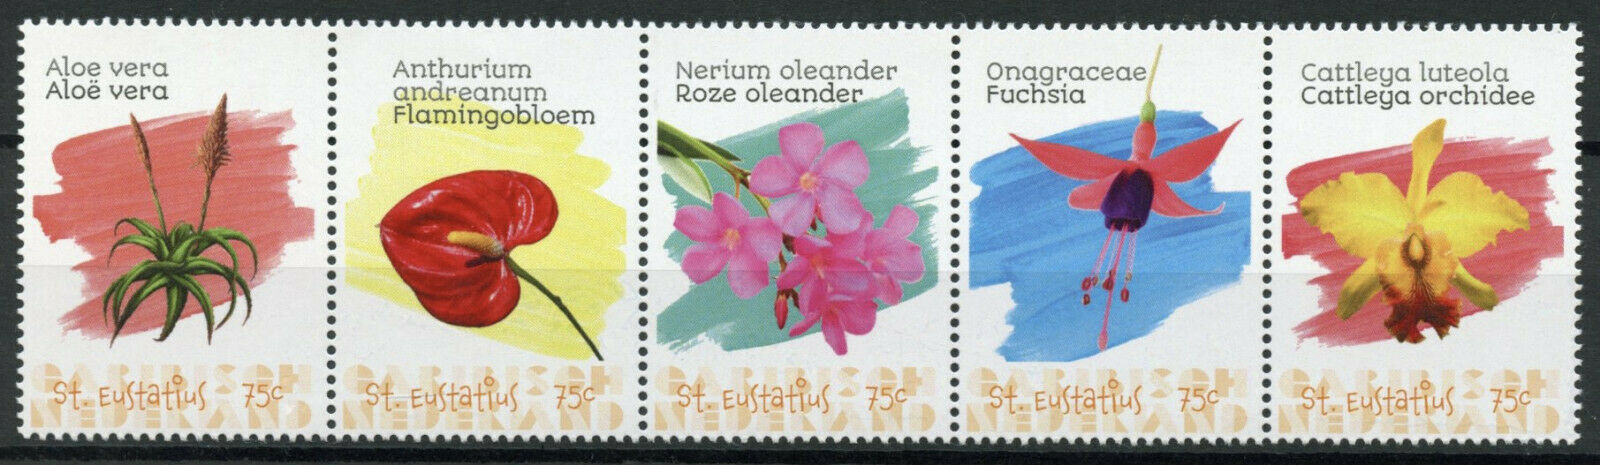 St Eustatius Caribbean Netherlands Flowers Stamps 2020 MNH Orchids Aloe 5v Strip